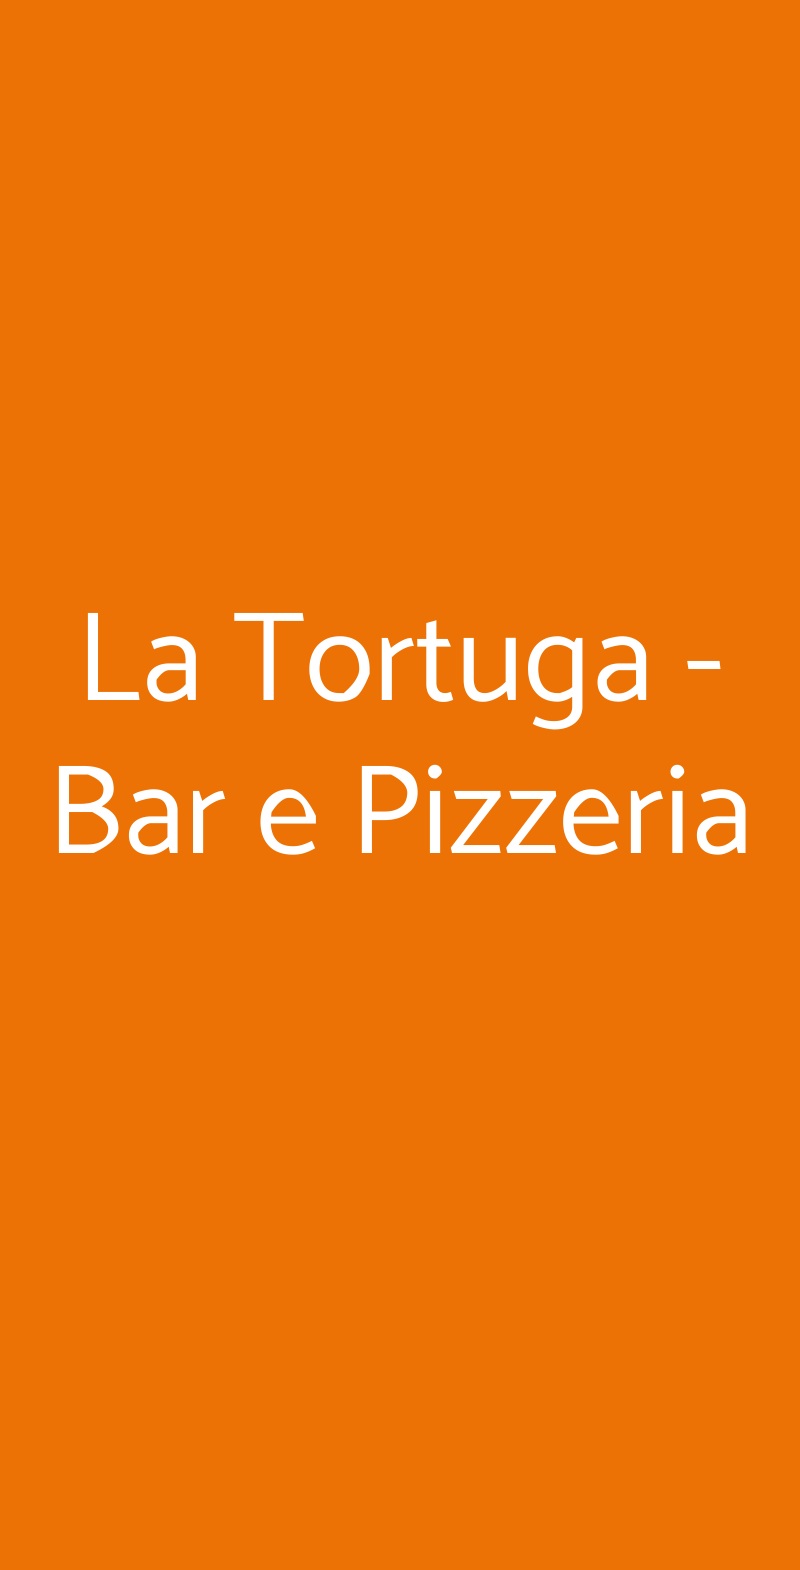 La Tortuga - Bar e Pizzeria Modena menù 1 pagina